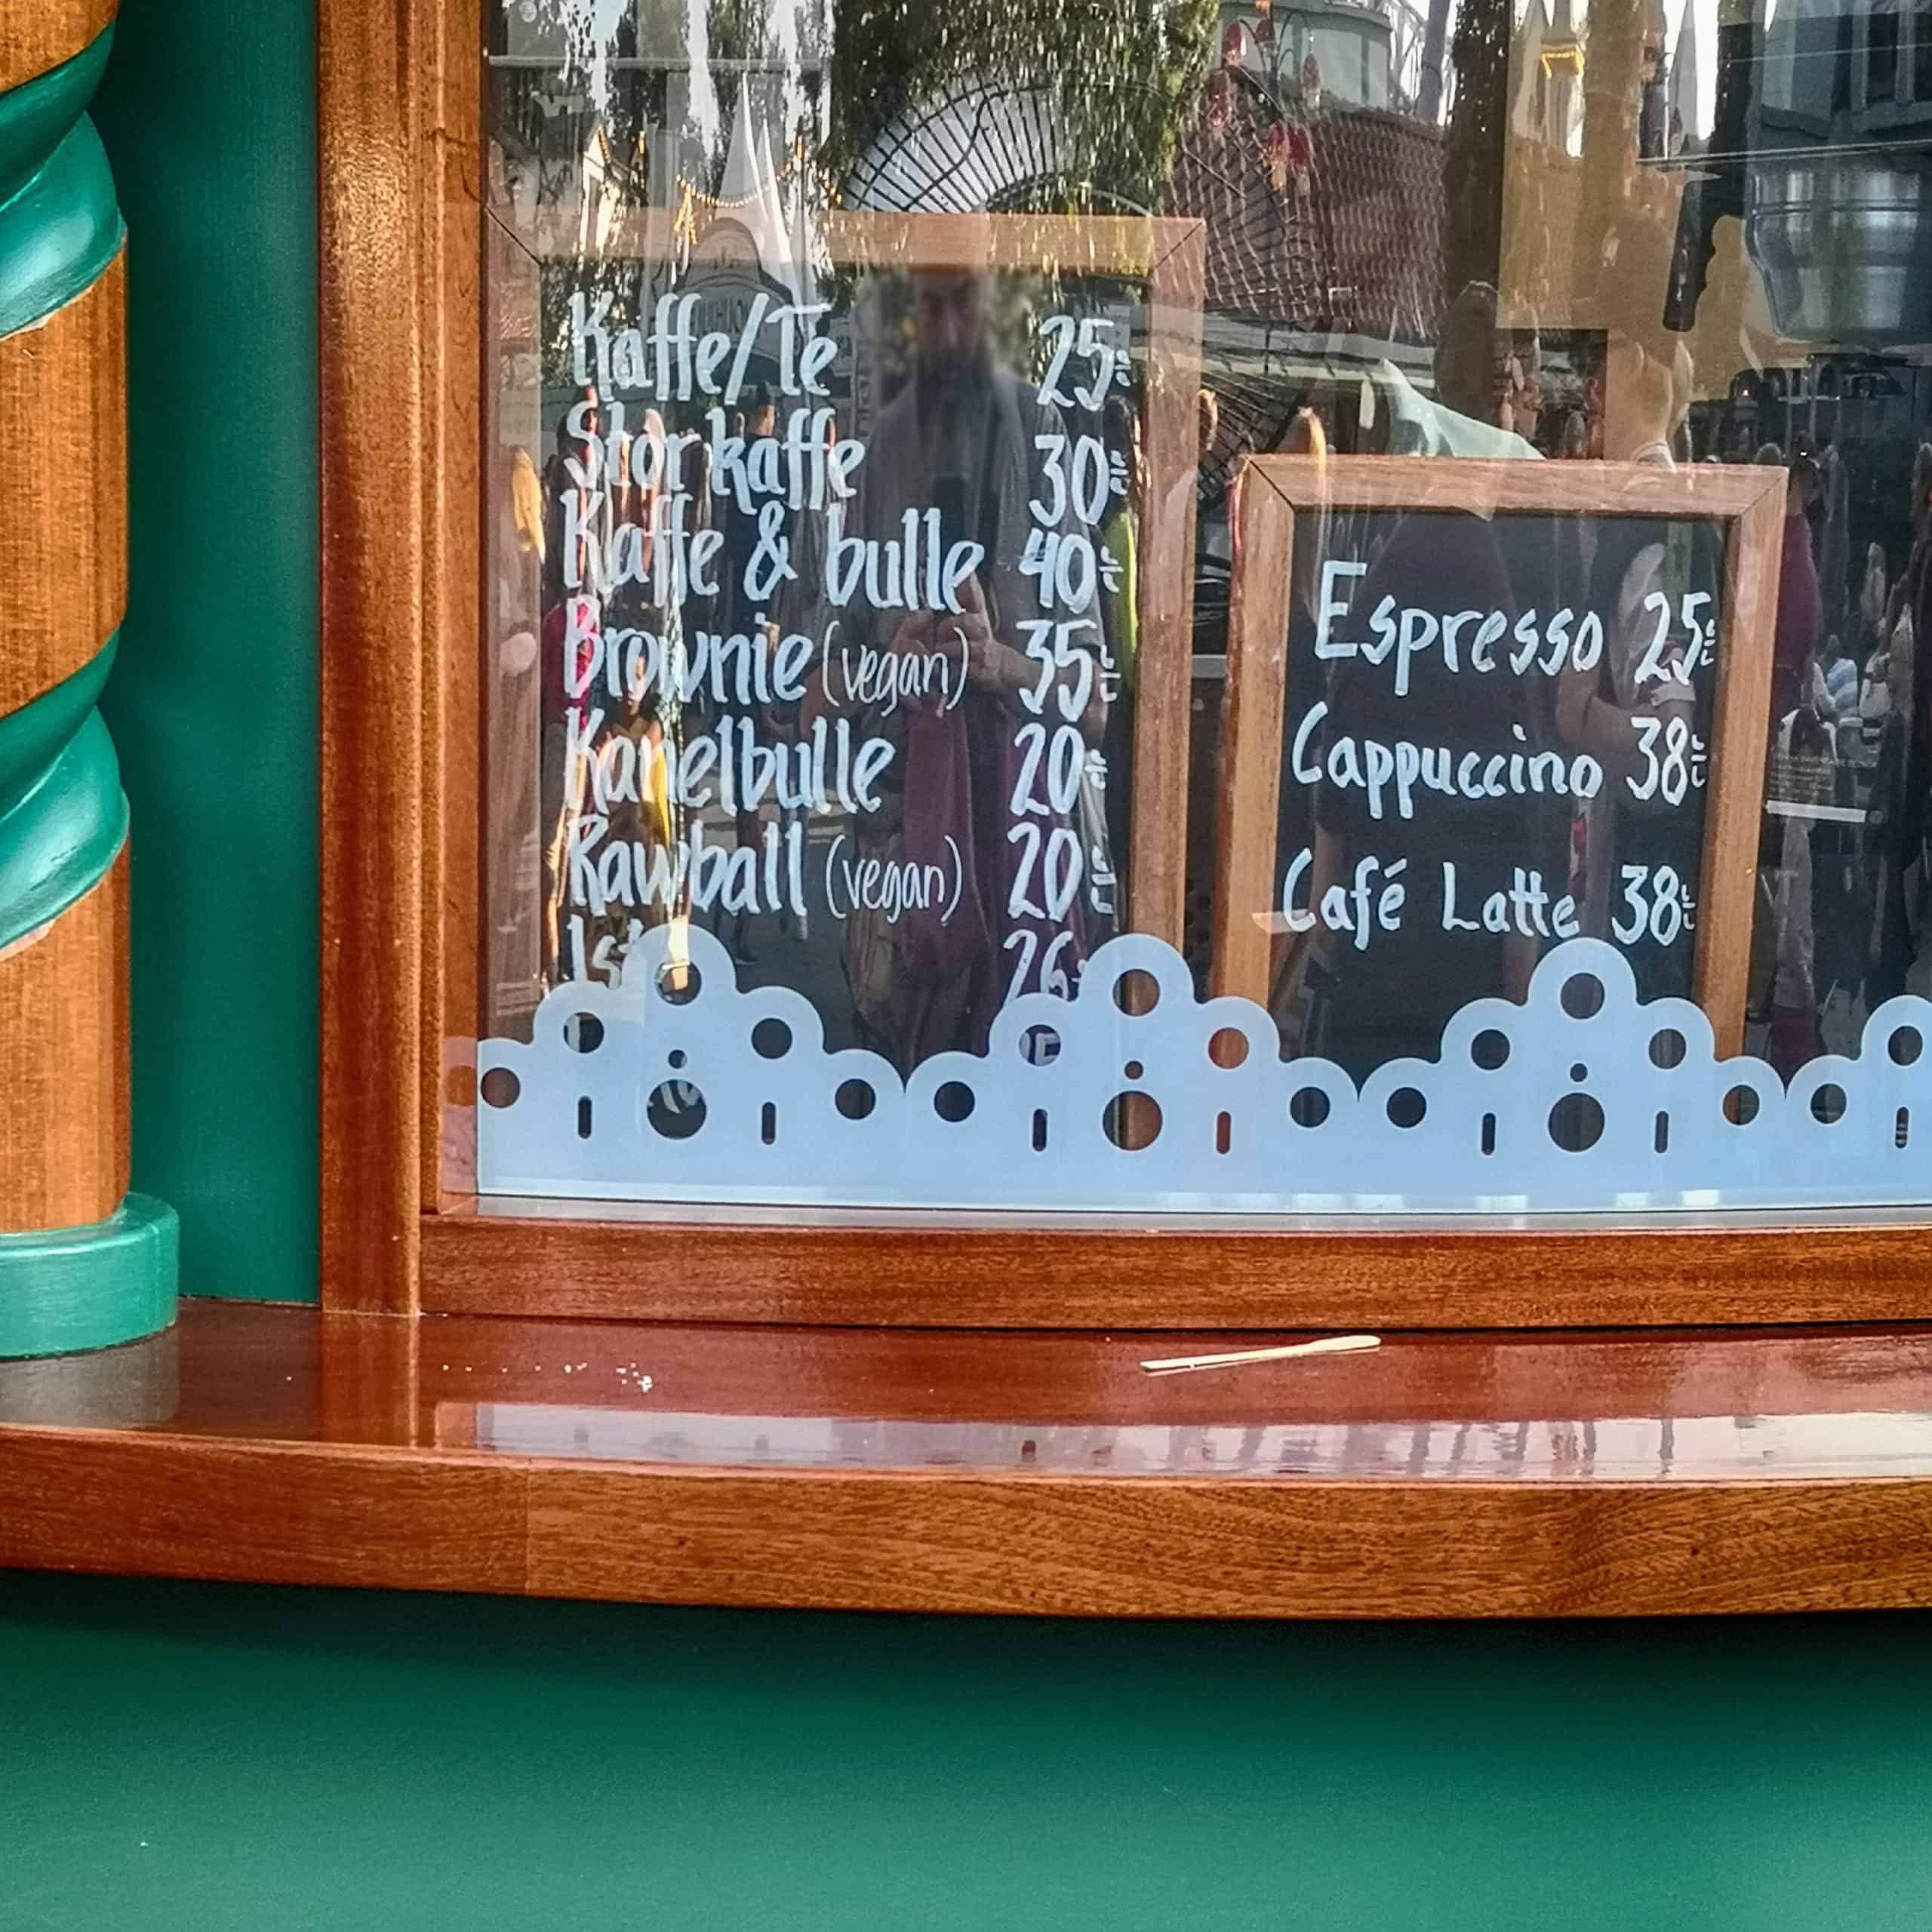 Espresso καφέ και είδη